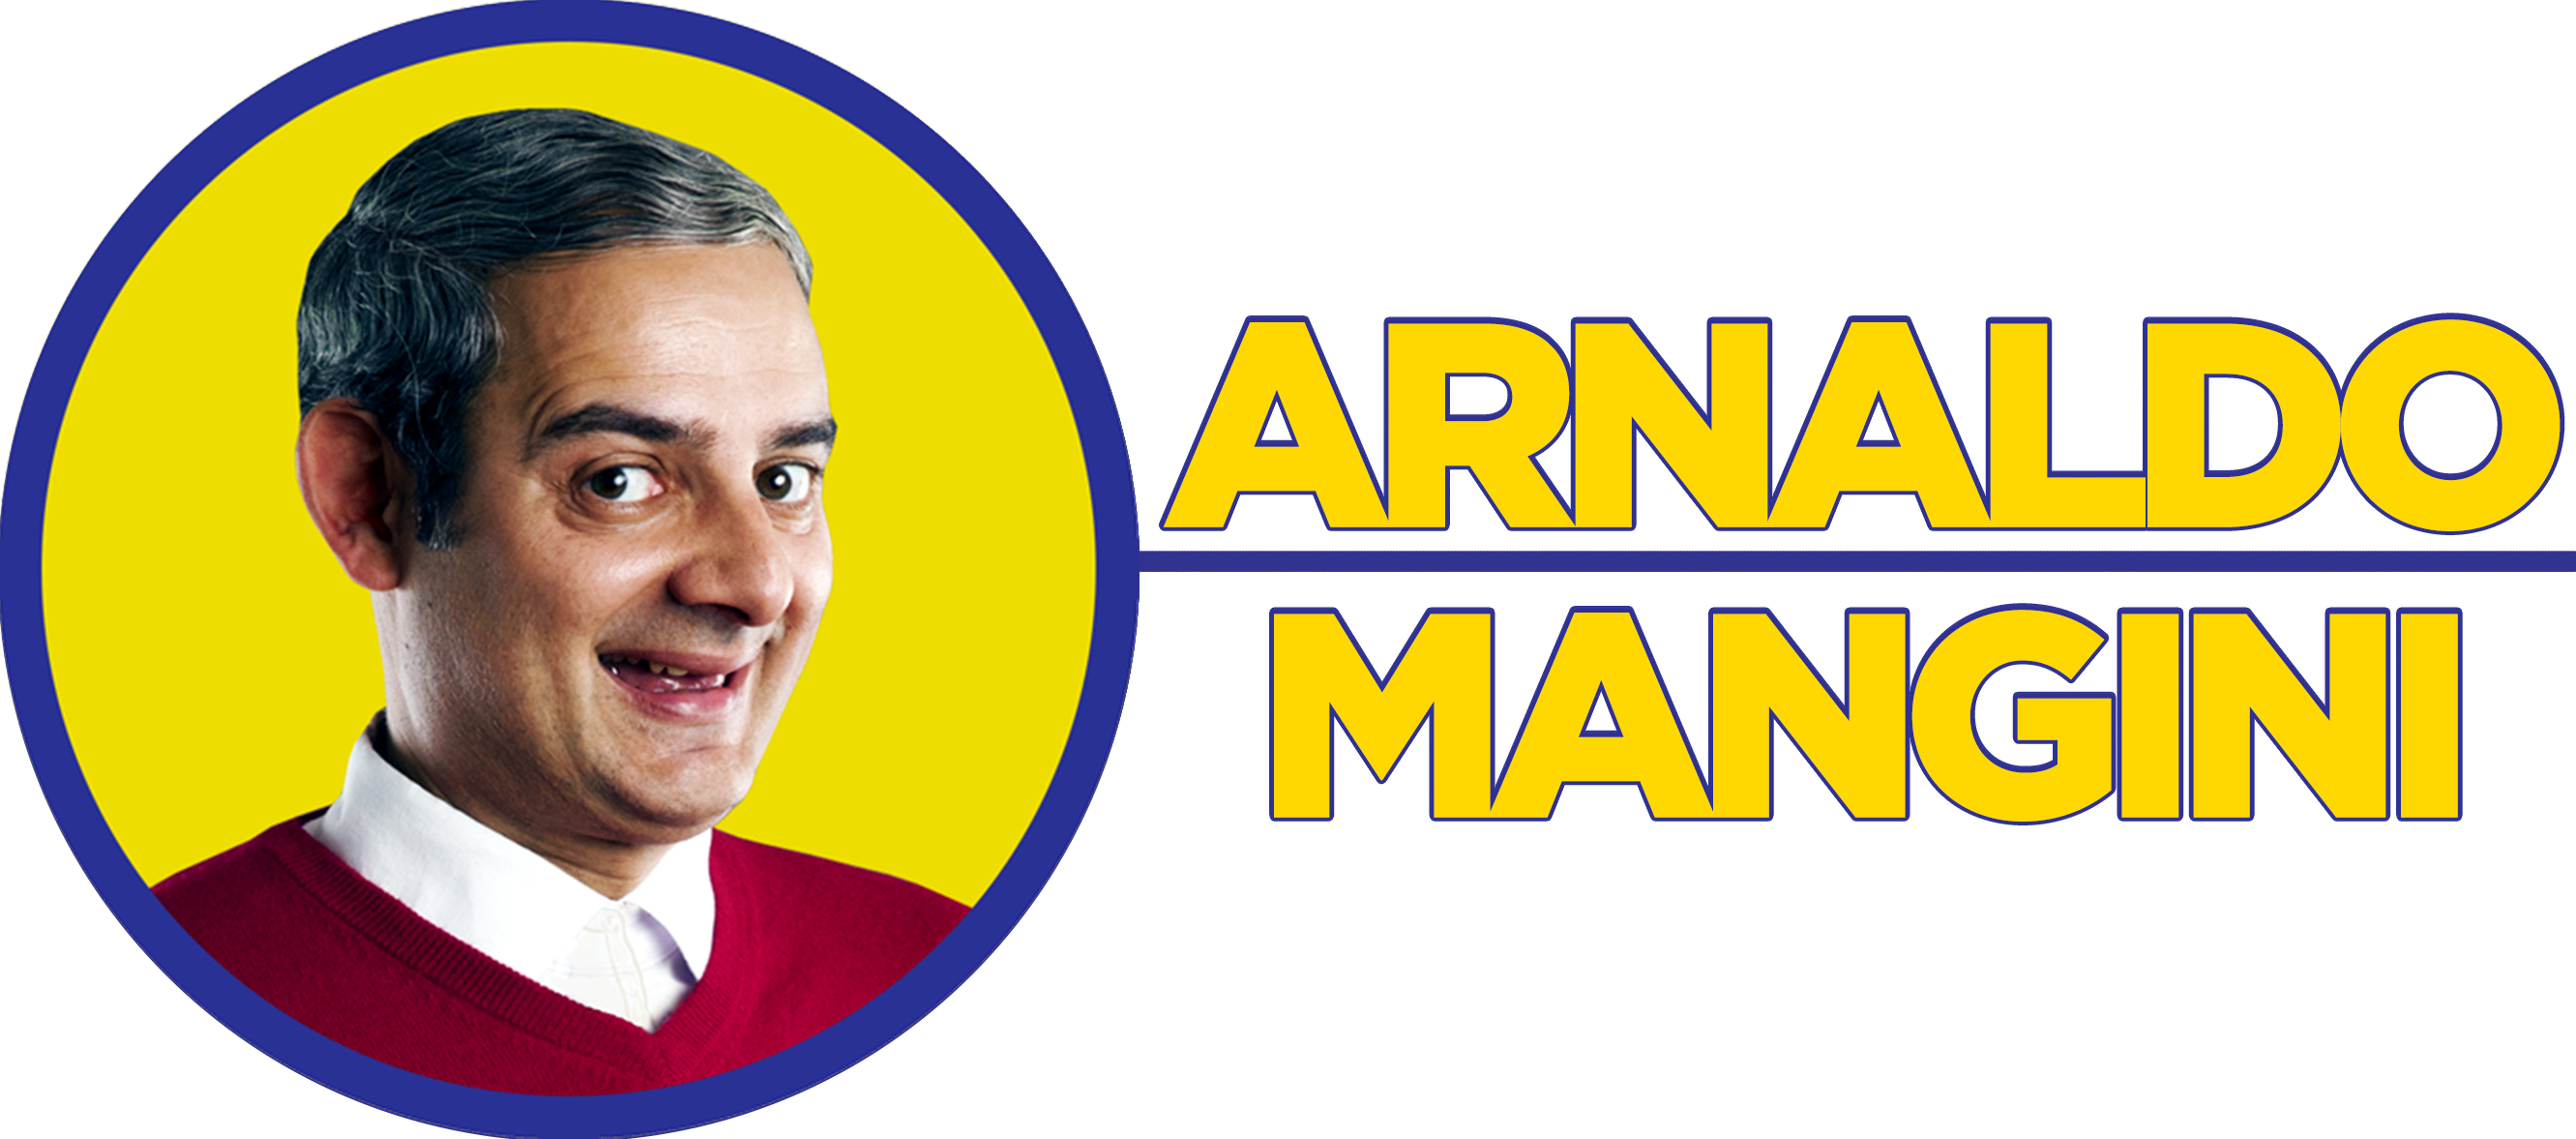 Stampa - Arnaldo Mangini Clown Actor / Content Creator